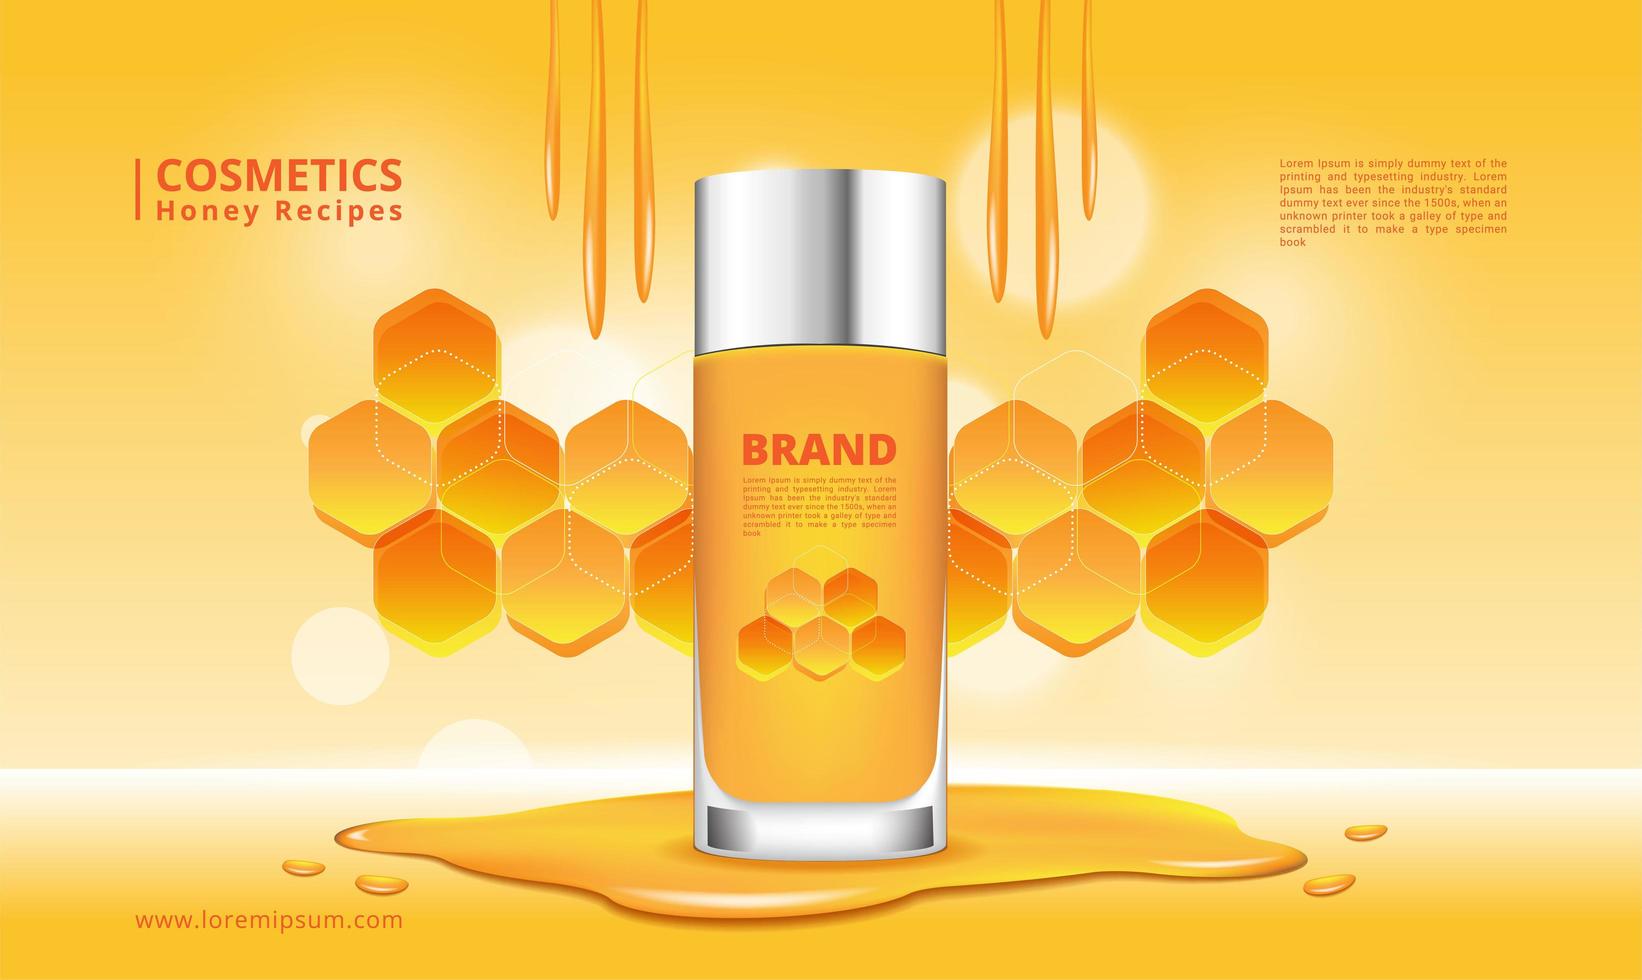 honung kosmetika produkt och honungskaka design vektor